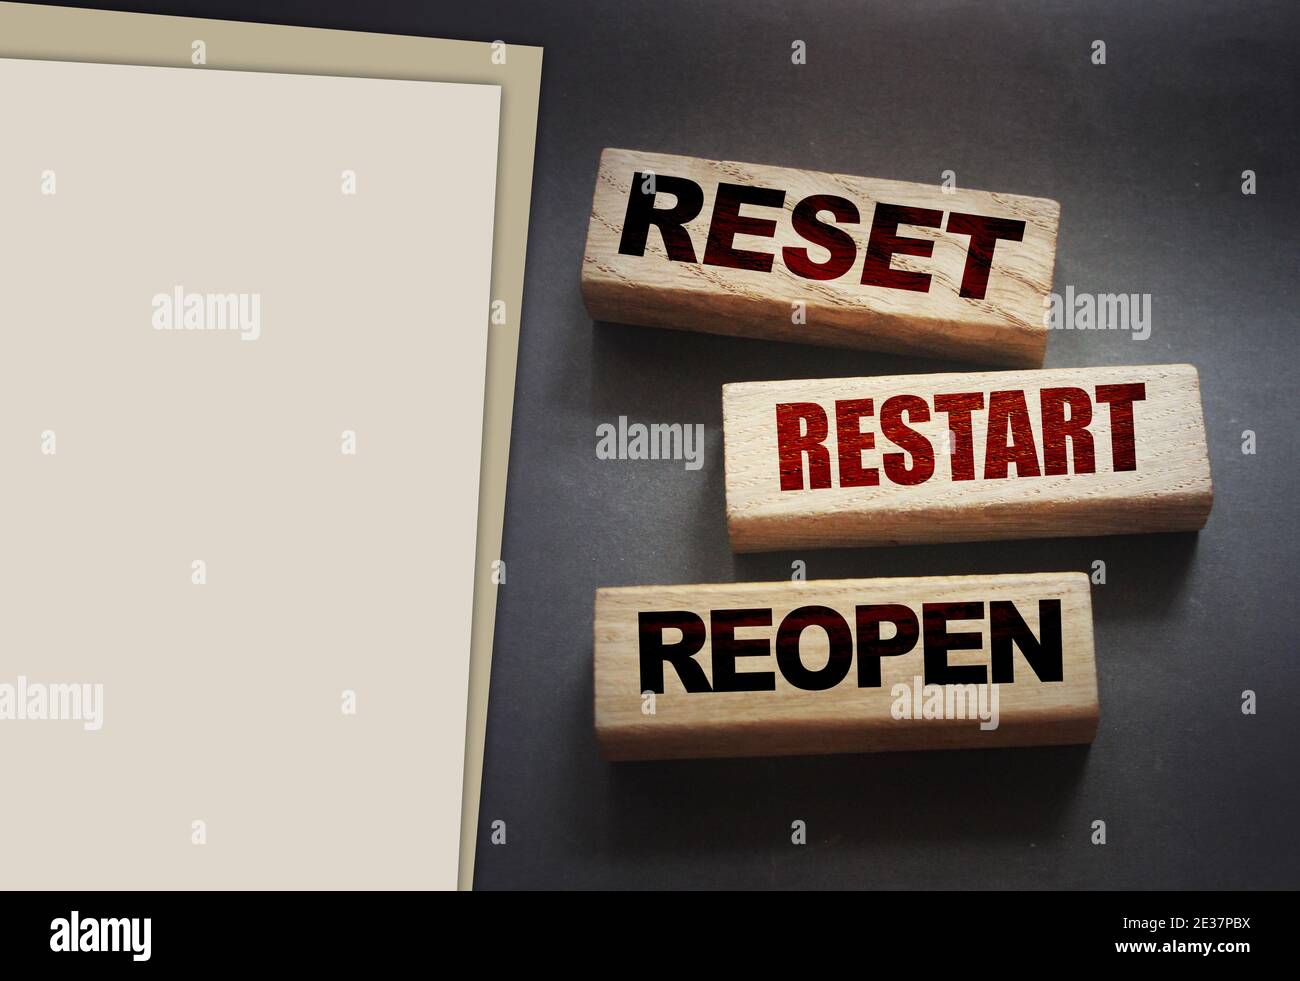 Reset, restart, reopen on wooden blocks on black background. Post pandemic world concept. Stock Photo